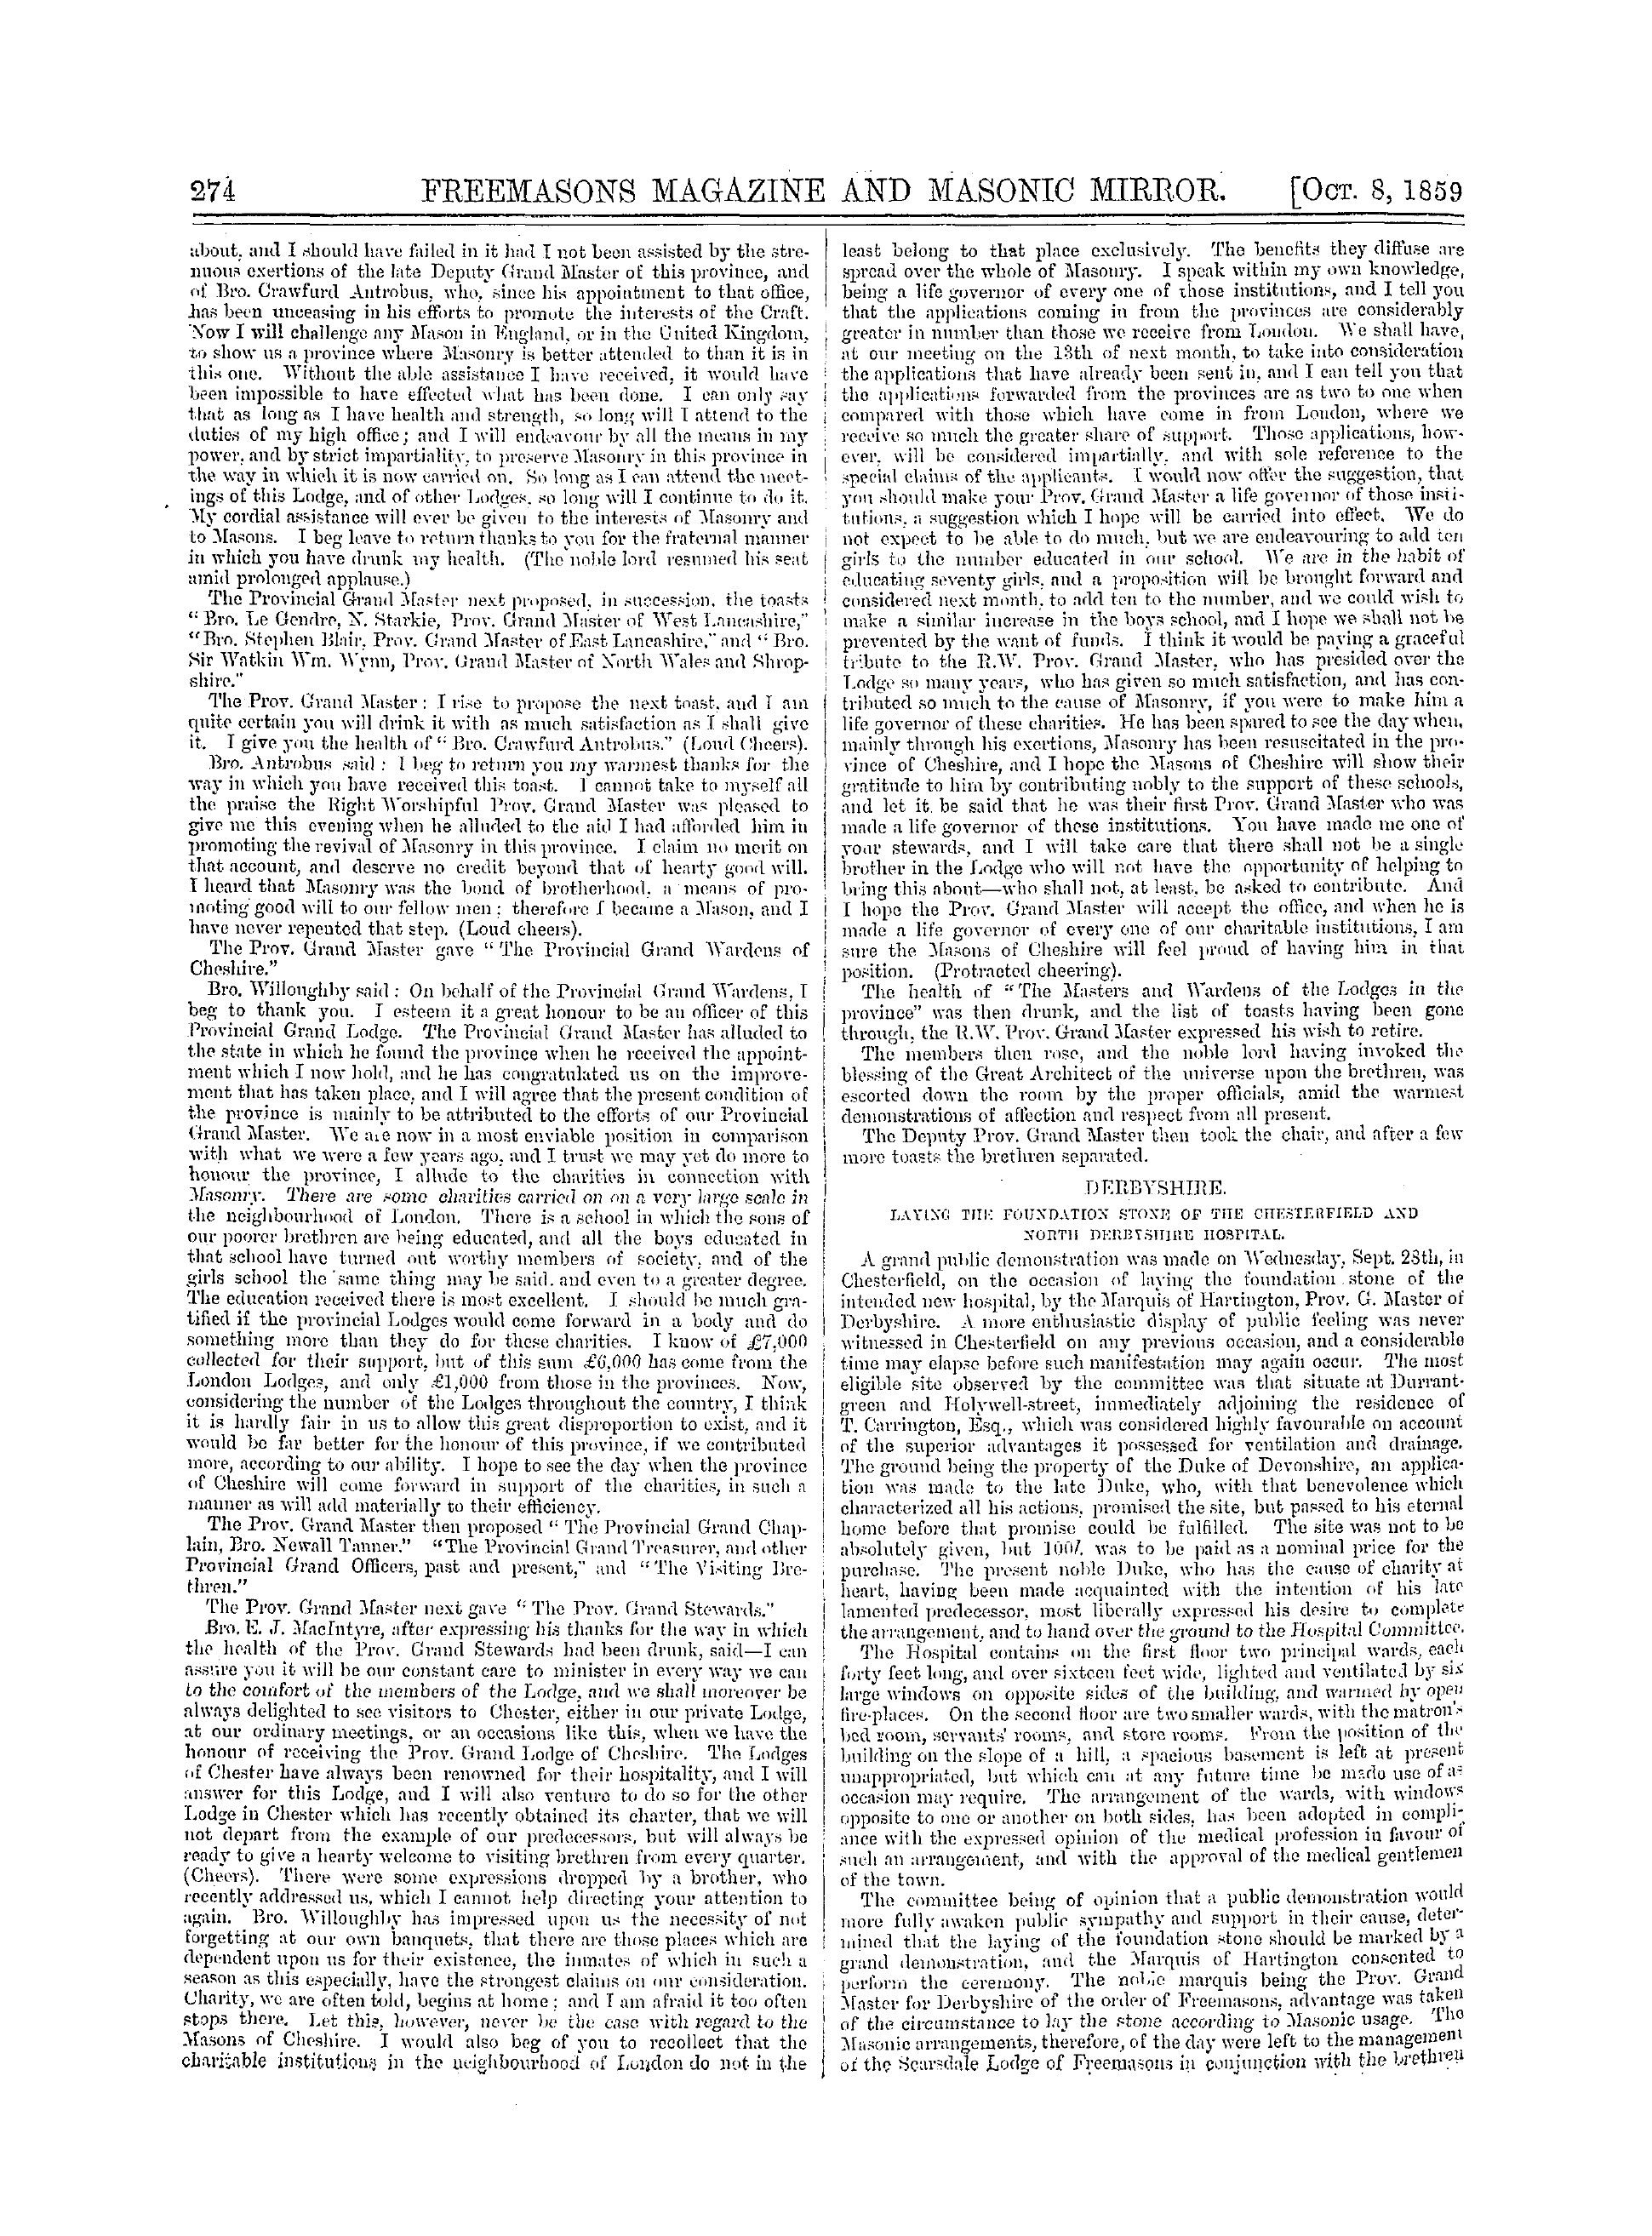 The Freemasons' Monthly Magazine: 1859-10-08 - Metropolitan.